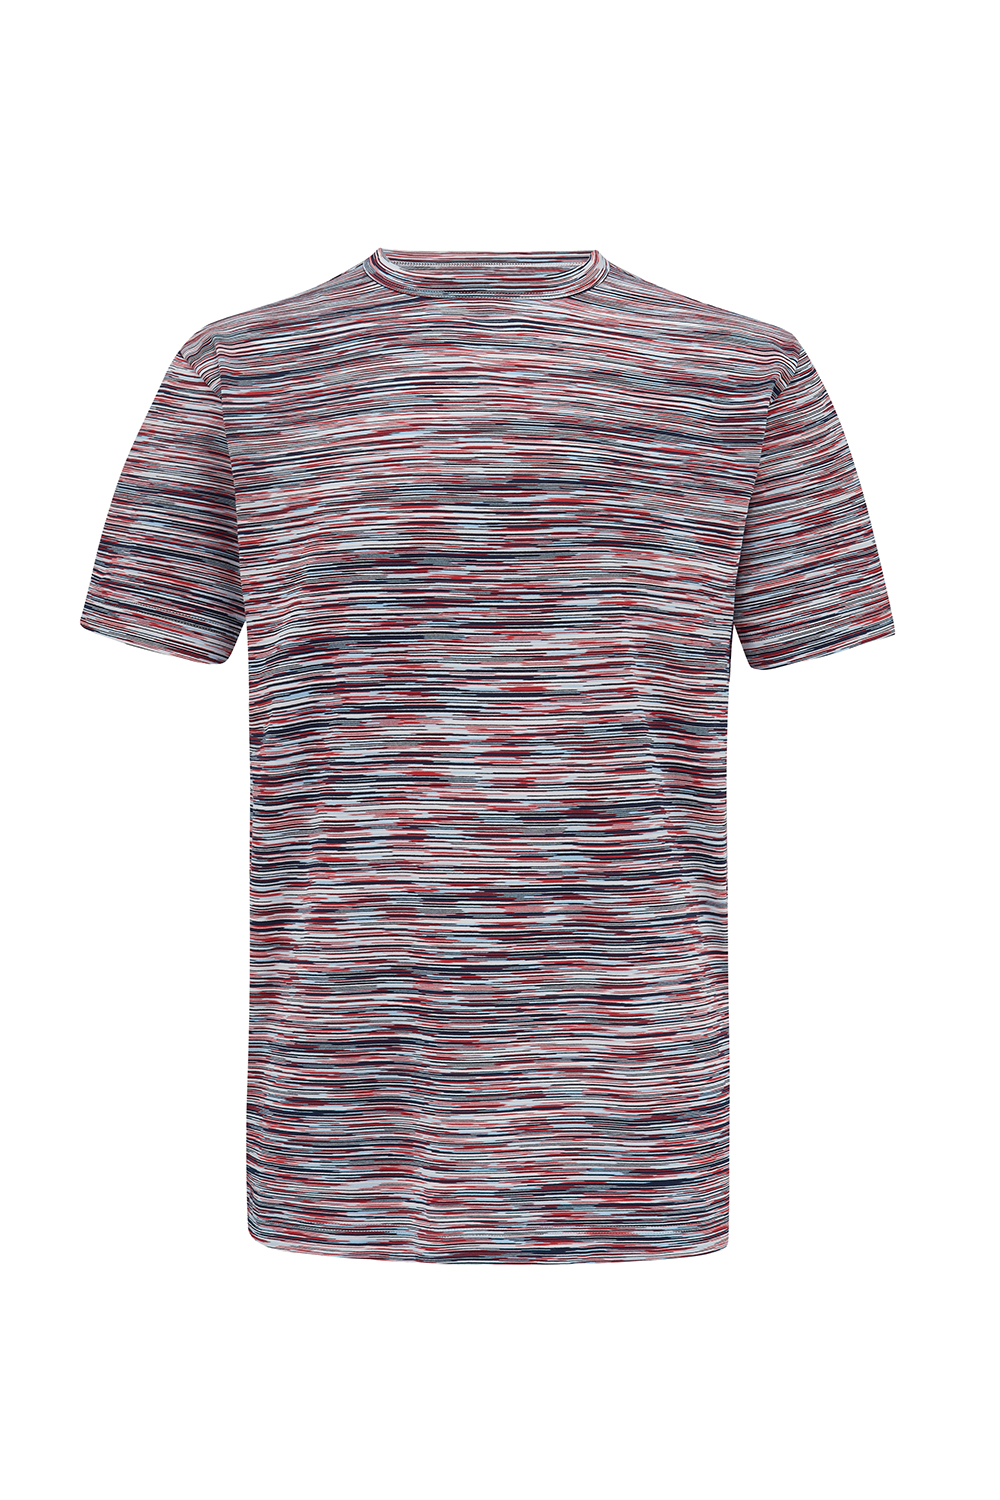 Missoni Men’s Striped T-shirt Multicoloured - New S22 Collection